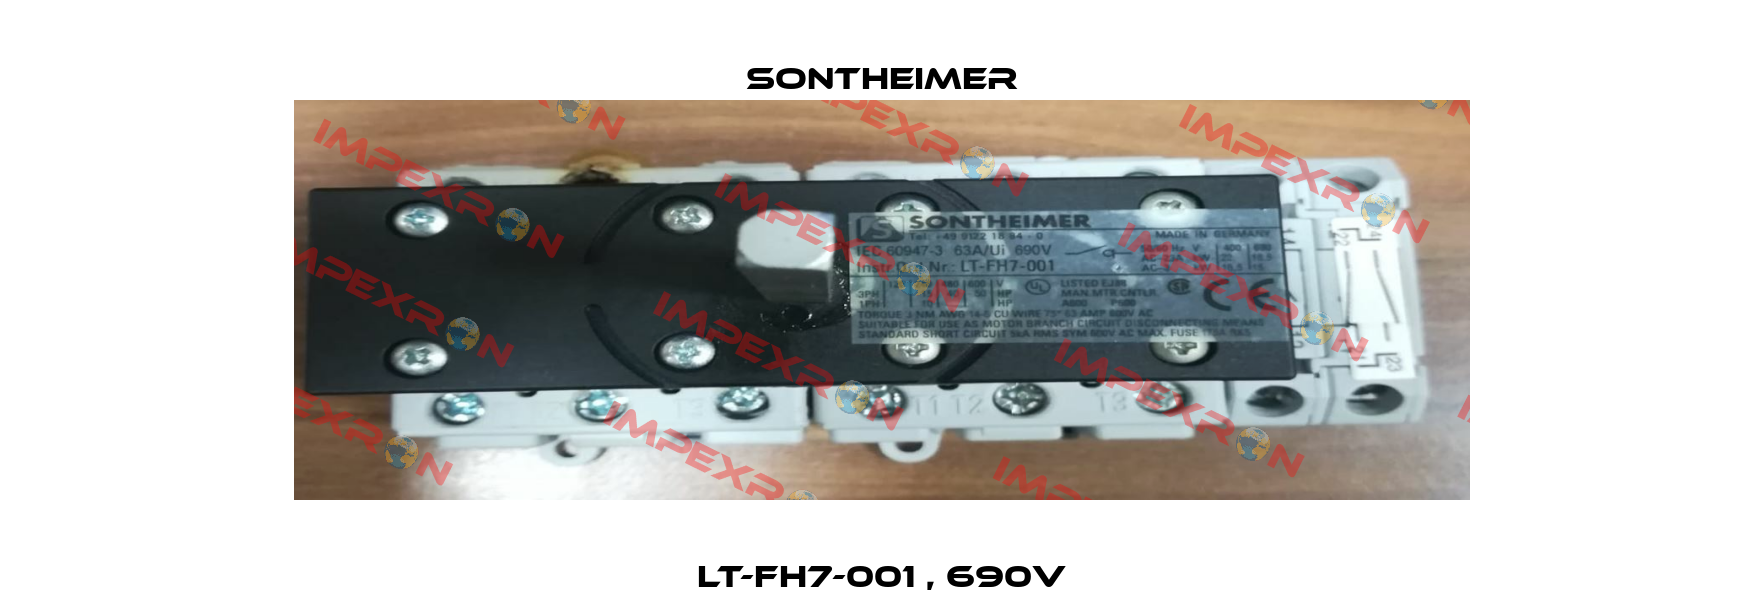 LT-FH7-001 , 690V Sontheimer